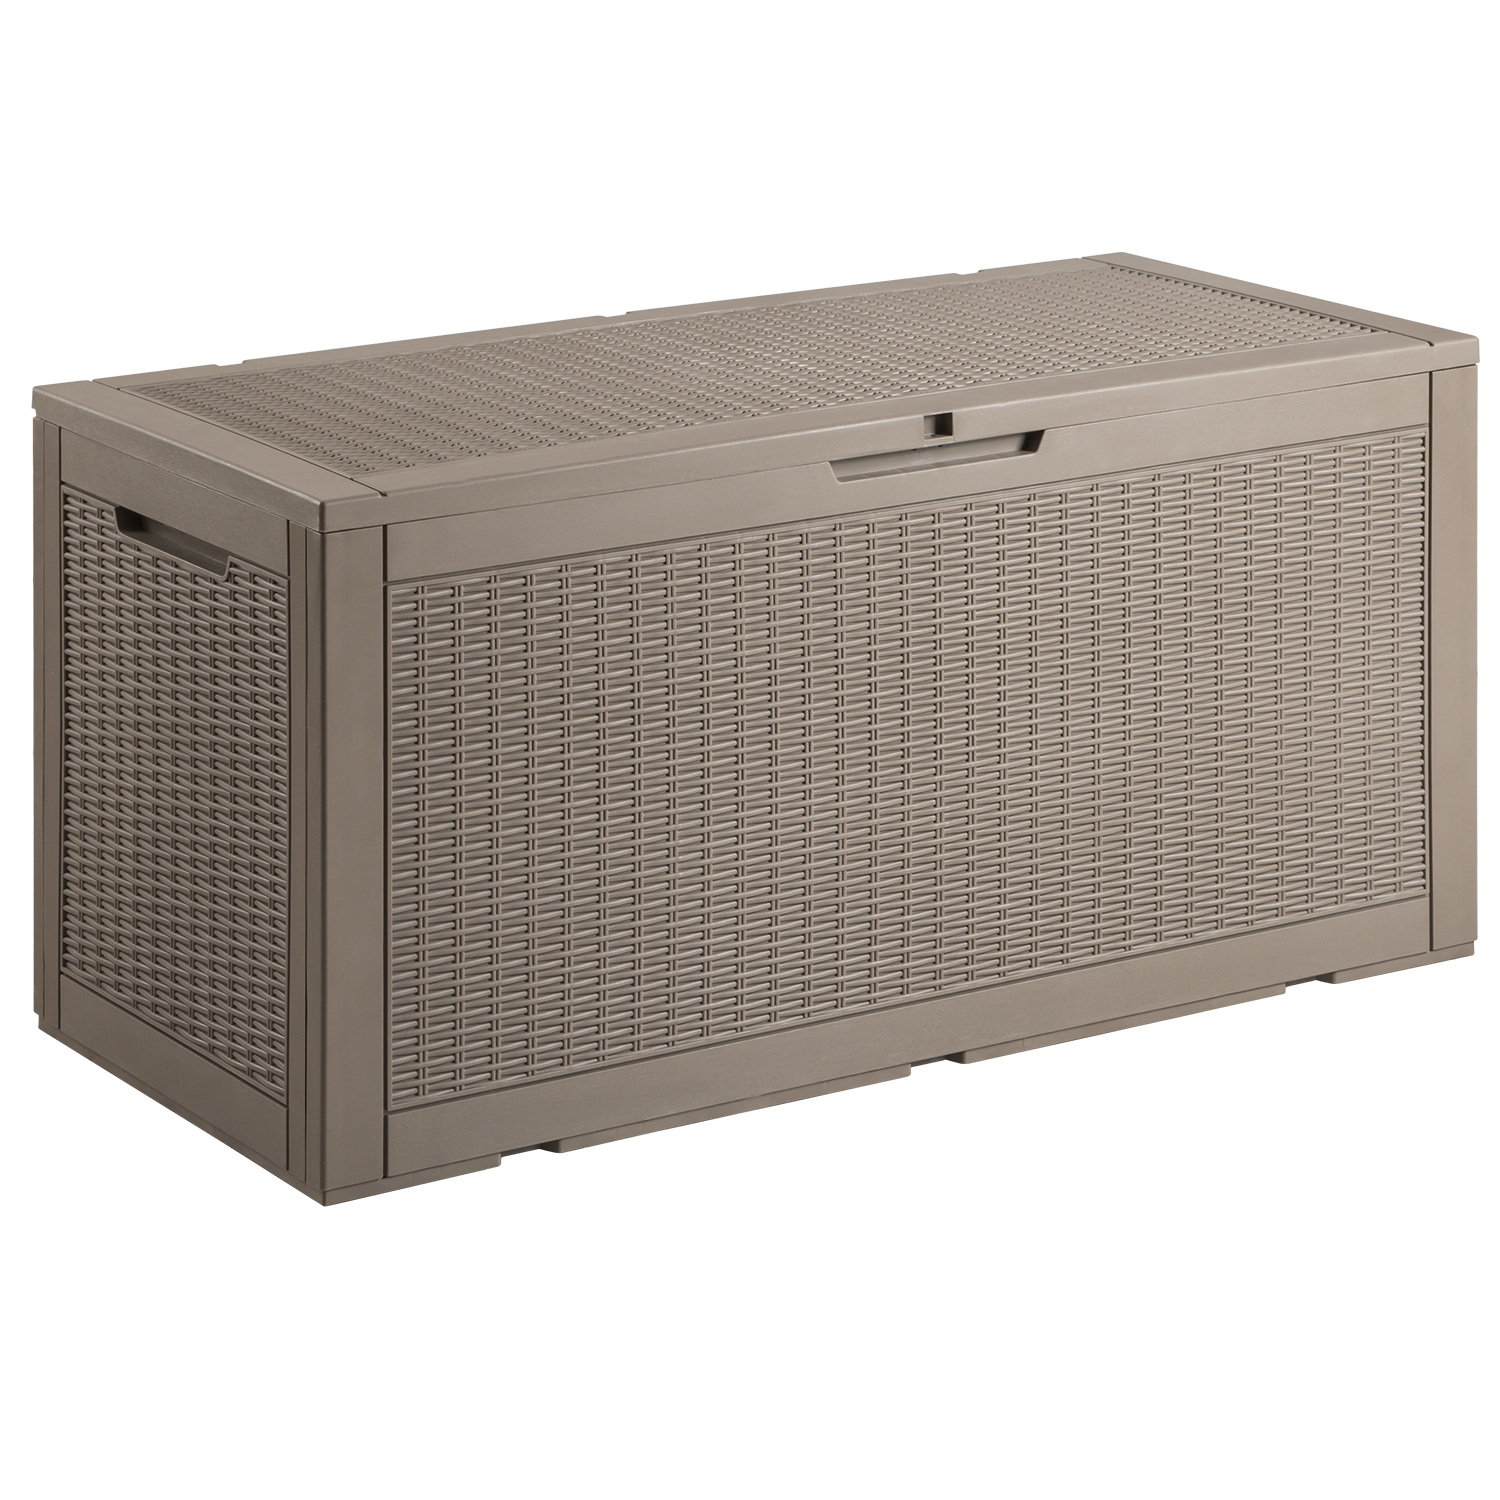 Devoko 100 Gallon Outdoor Patio Box Deck Plastic Resin Lockable Storage Box, Brown - image 1 of 7